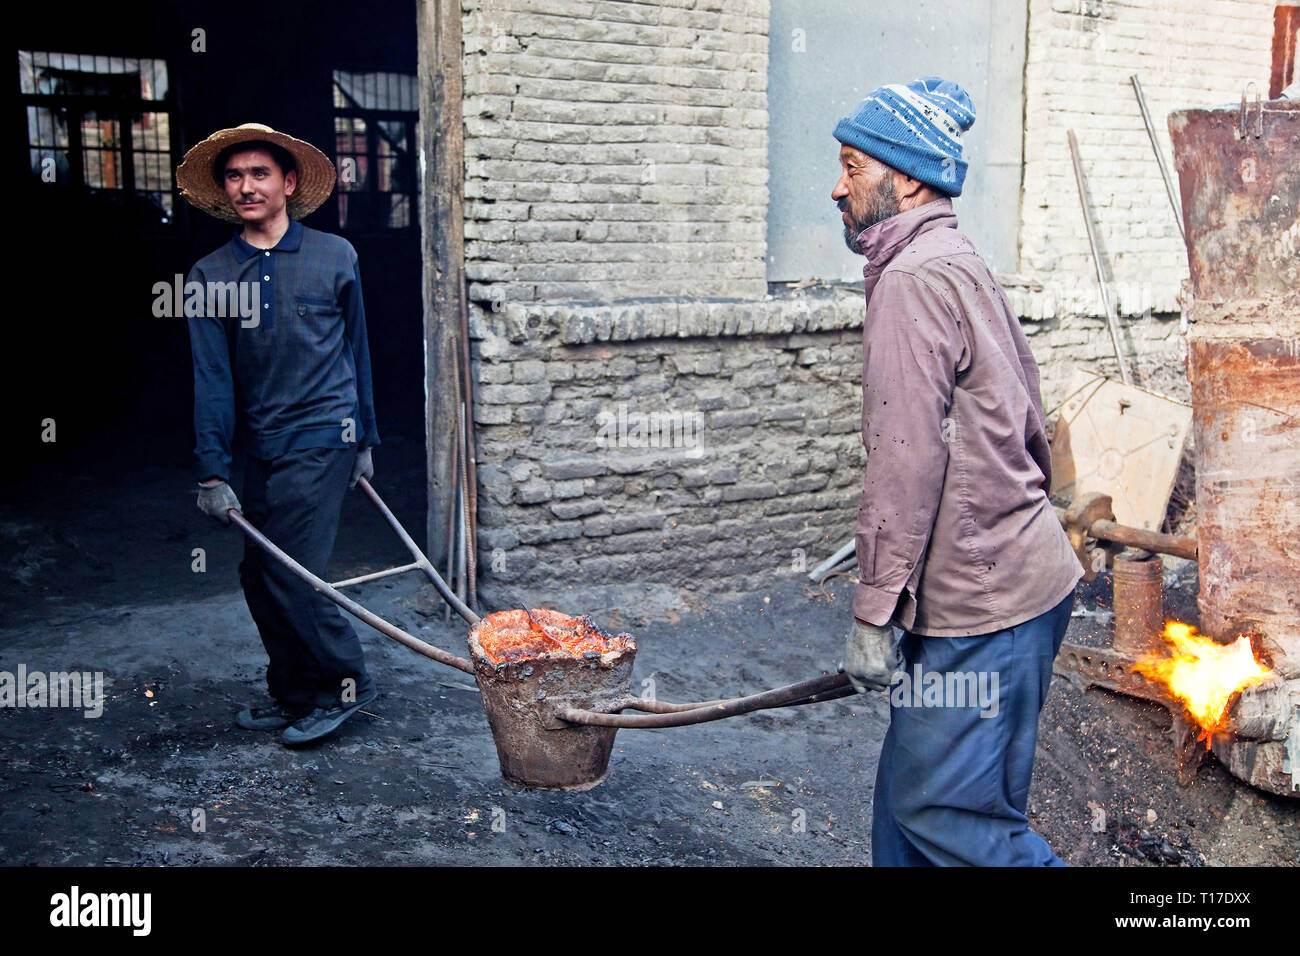 Traditional metal casting in Hotan, Xinjiang Autonomous Region, China. Stock Photo